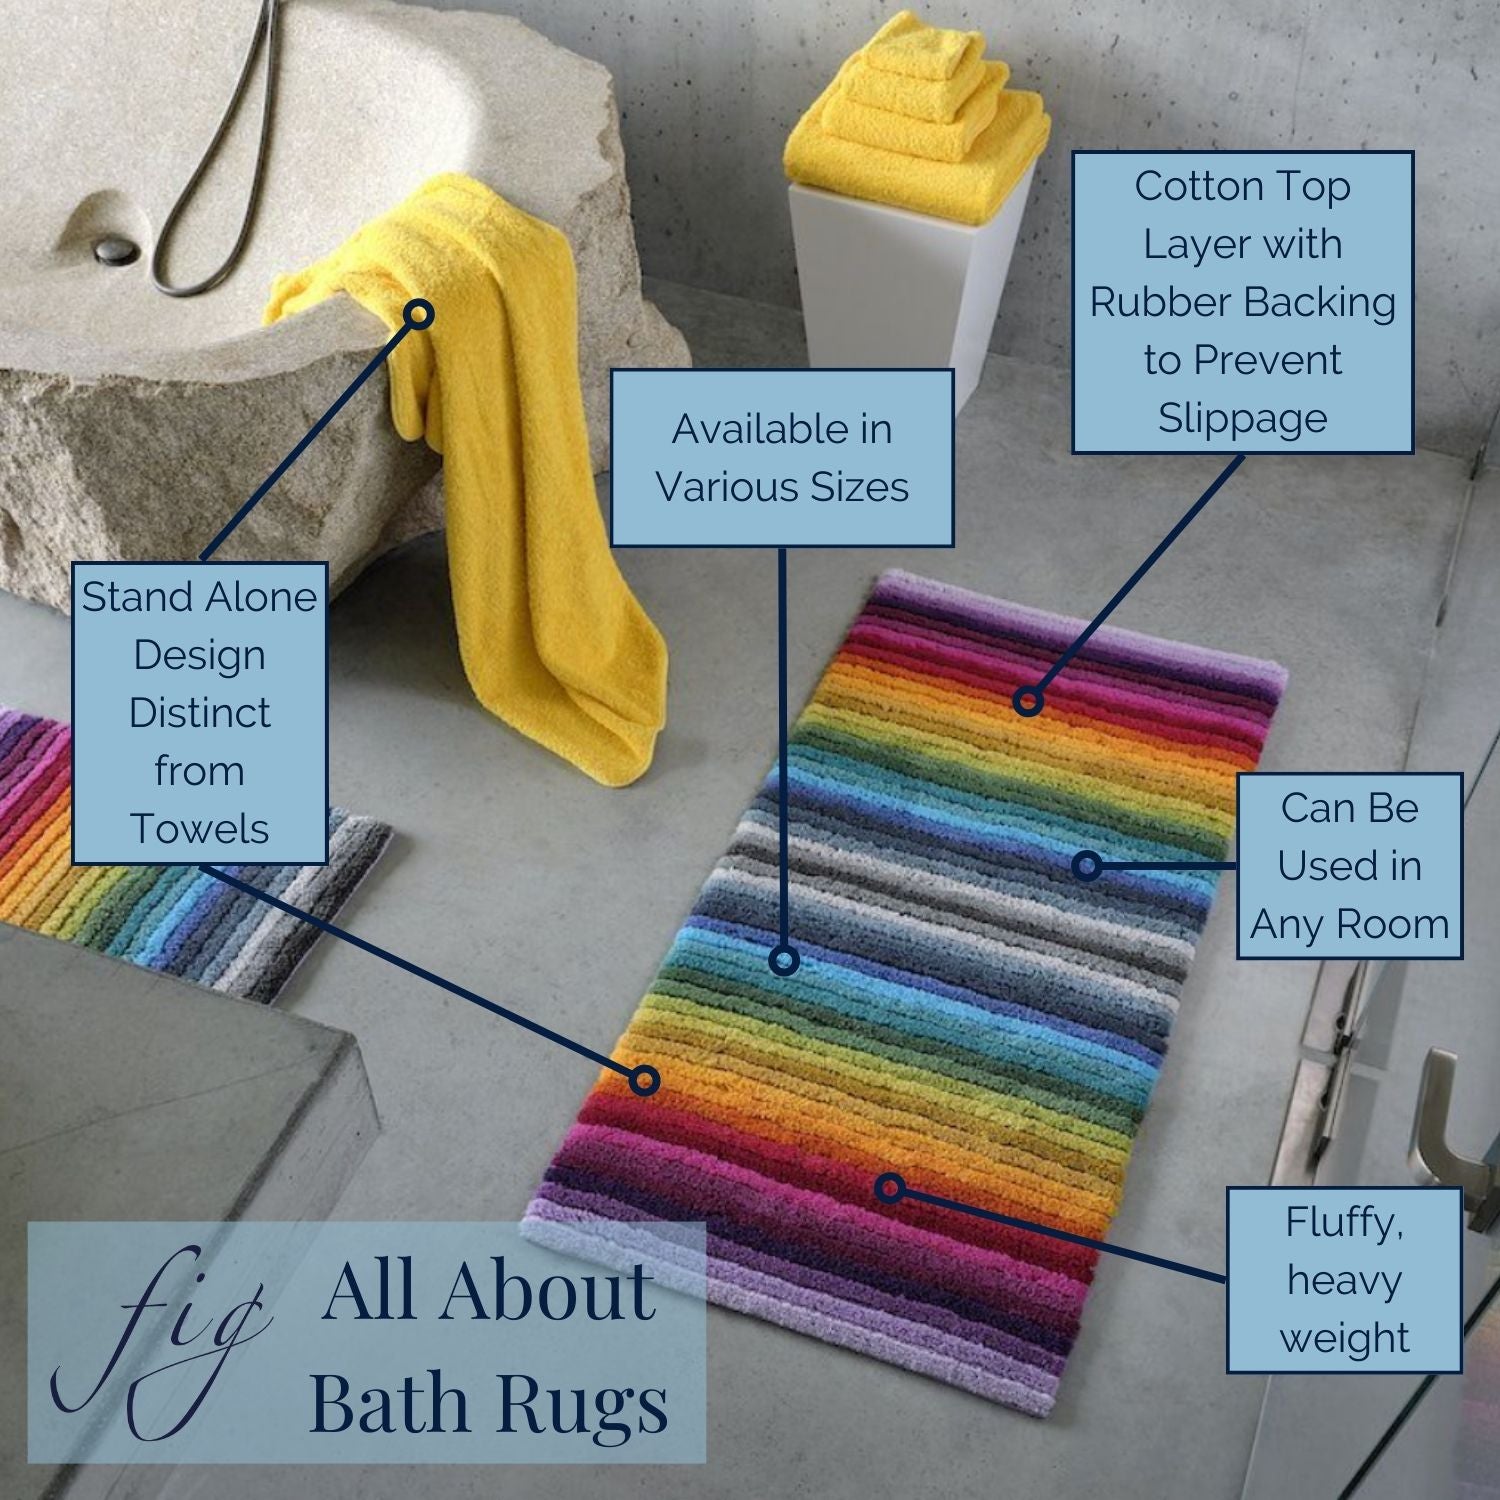 Avoiding Bathroom Blunders: A Guide to Choosing Bathroom Rugs